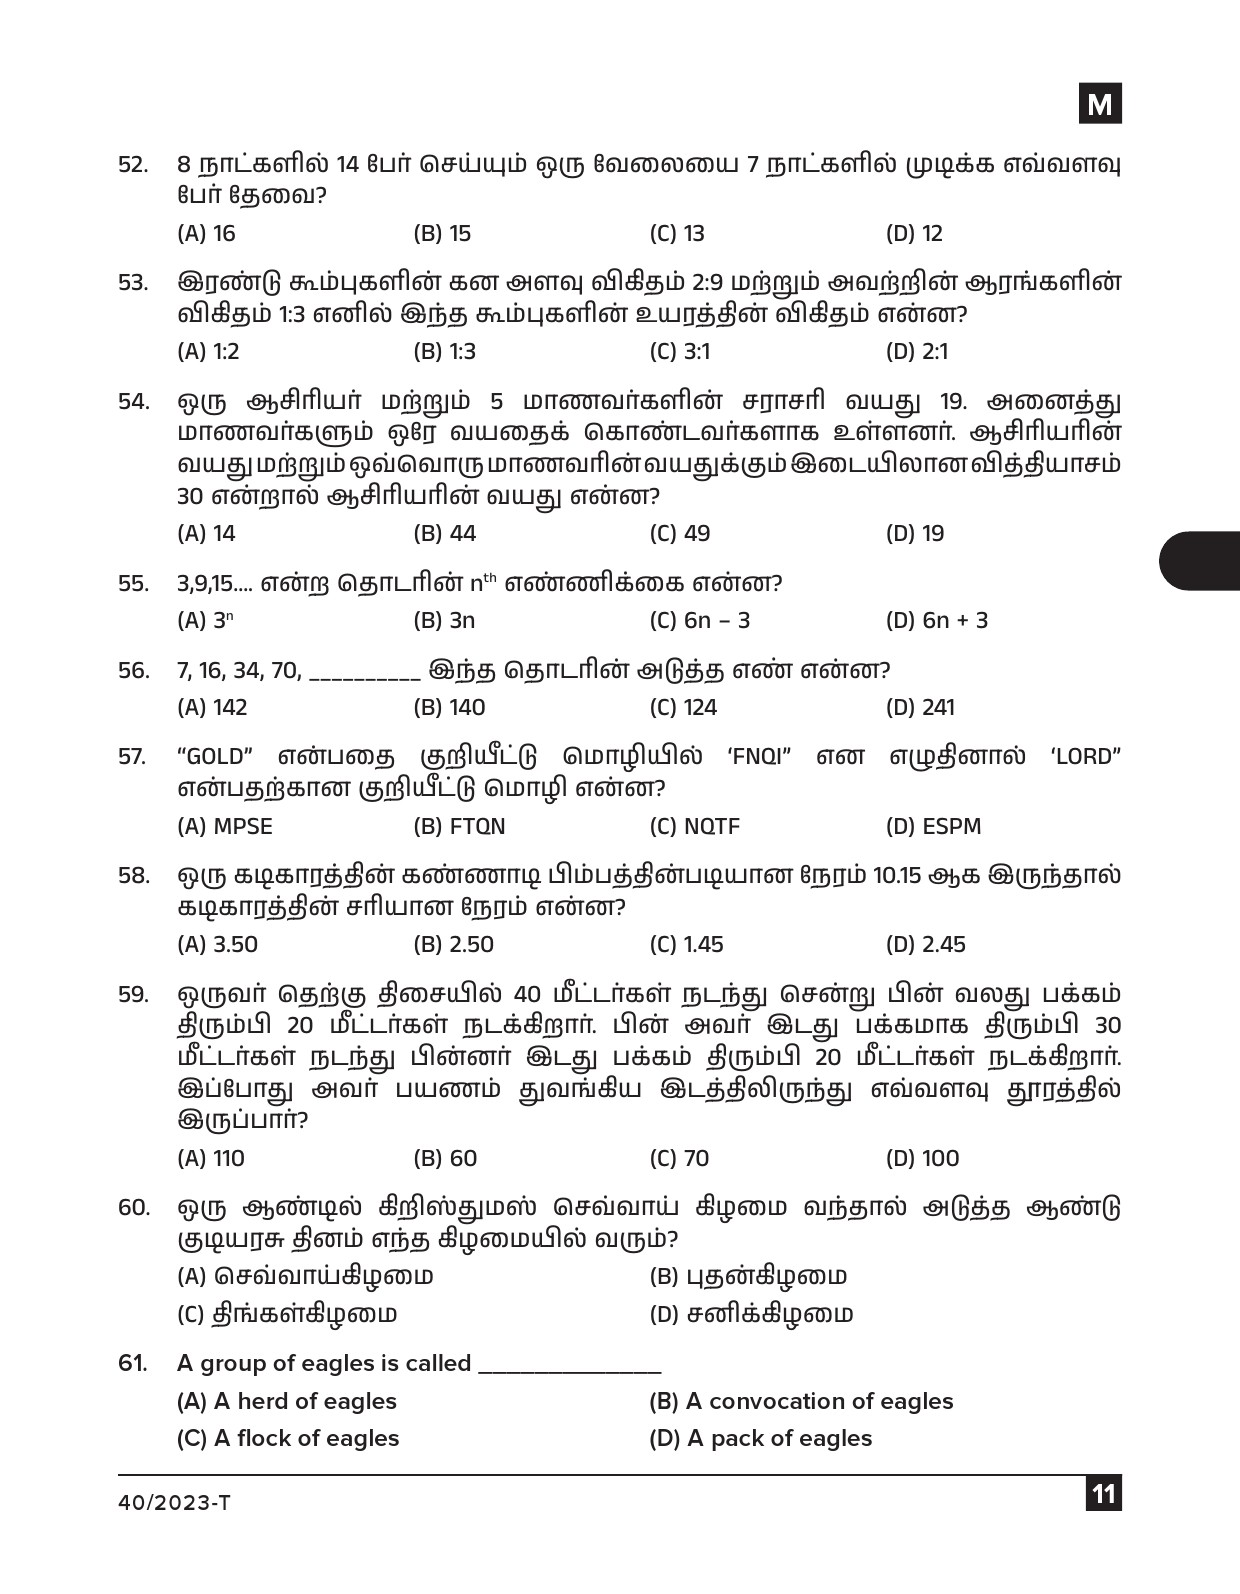 KPSC Data Entry Operator Tamil Exam 2023 Code 0402023 T 10